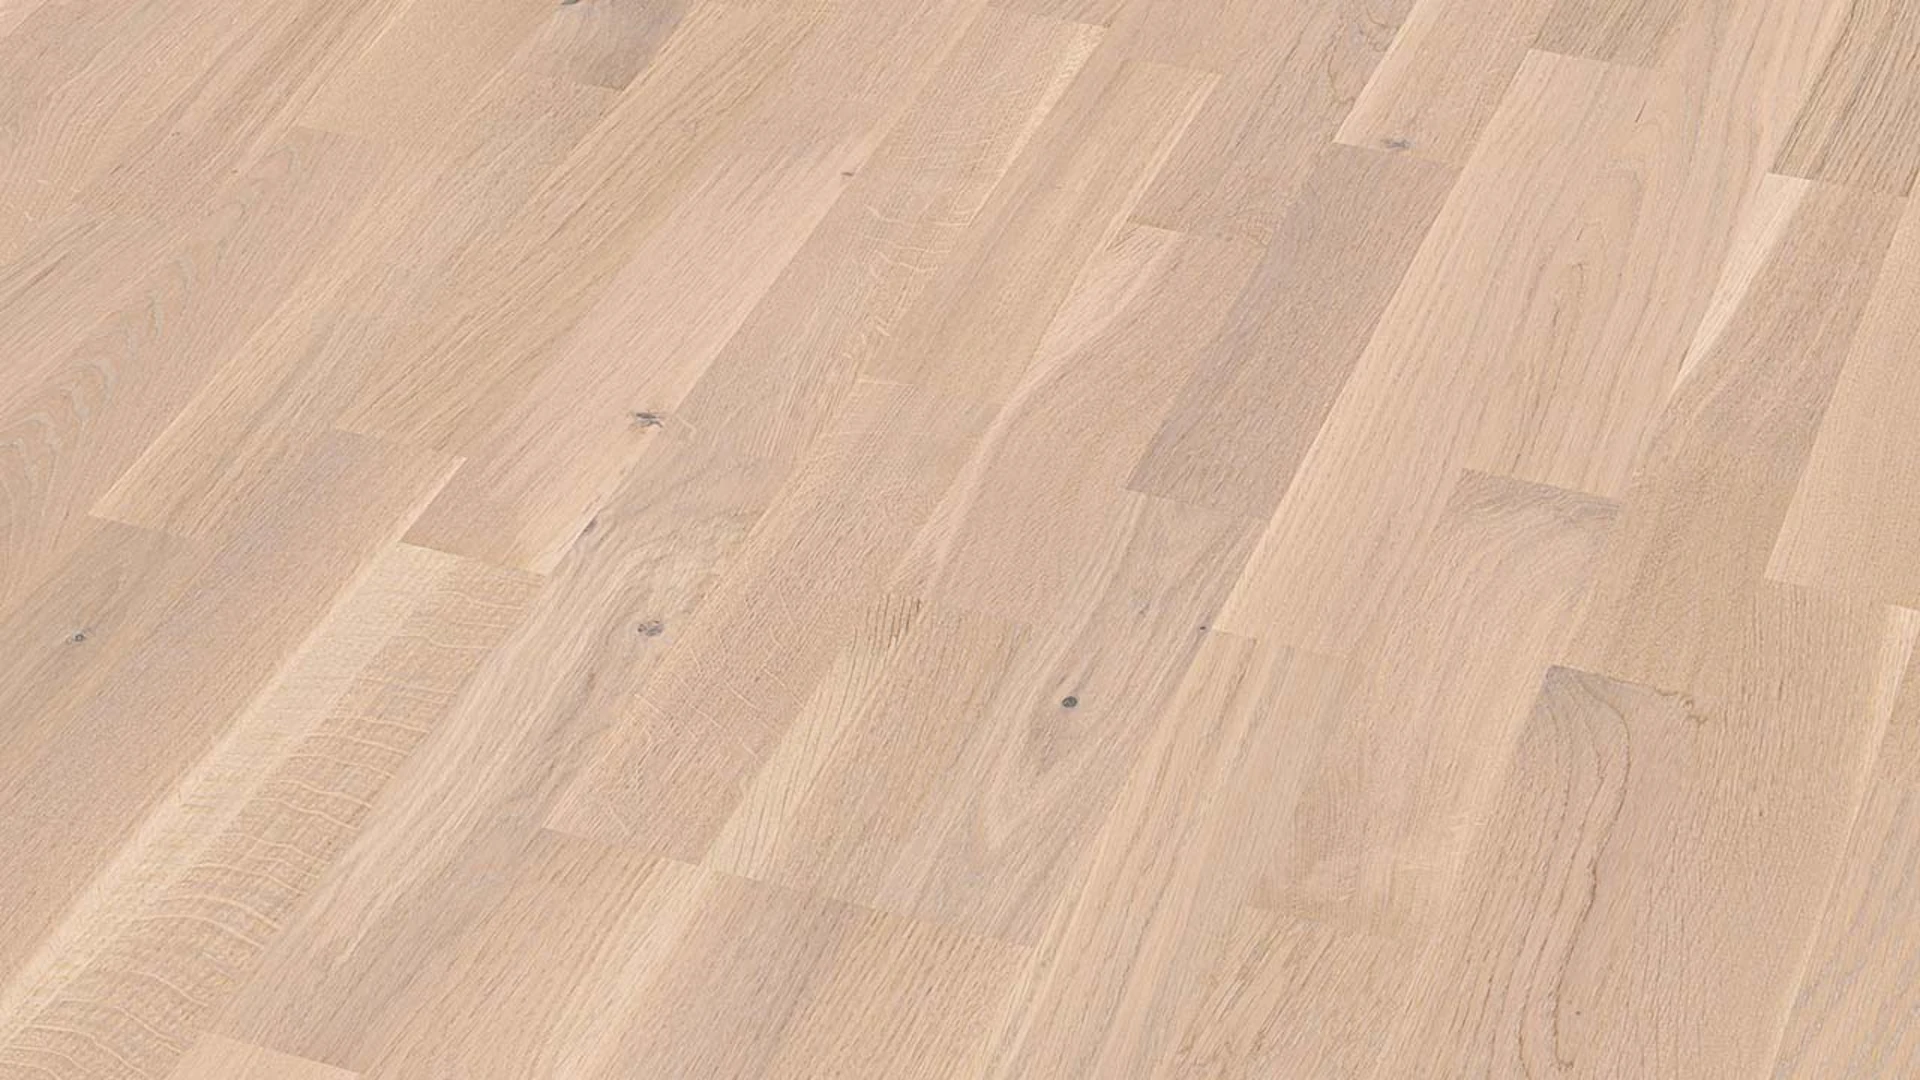 MEISTER Parquet Flooring - Longlife PC 200 Oak lively cream white (500009-2400200-09035)